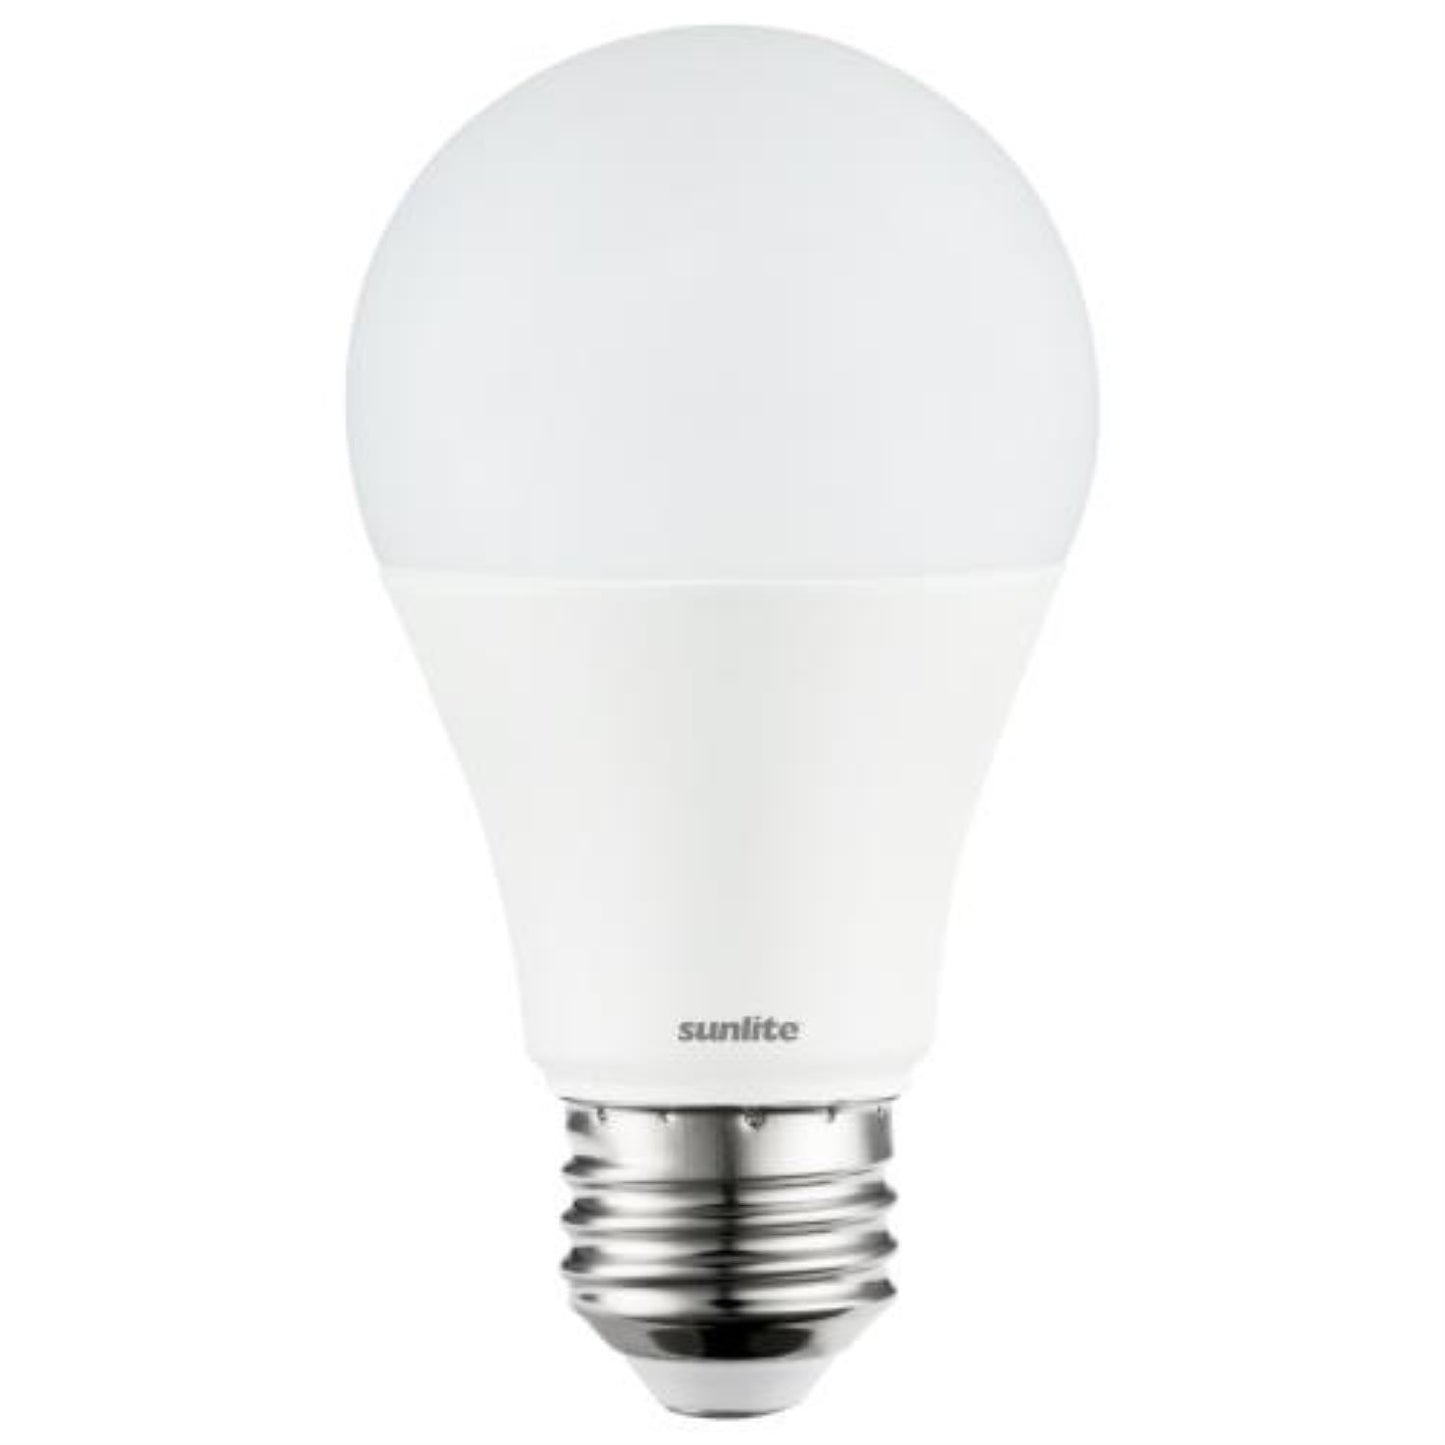 Sunlite A19 LED Bulb, 9 Watts (60W Equivalent), Medium Base (E26), 6500K Daylight, UL Listed